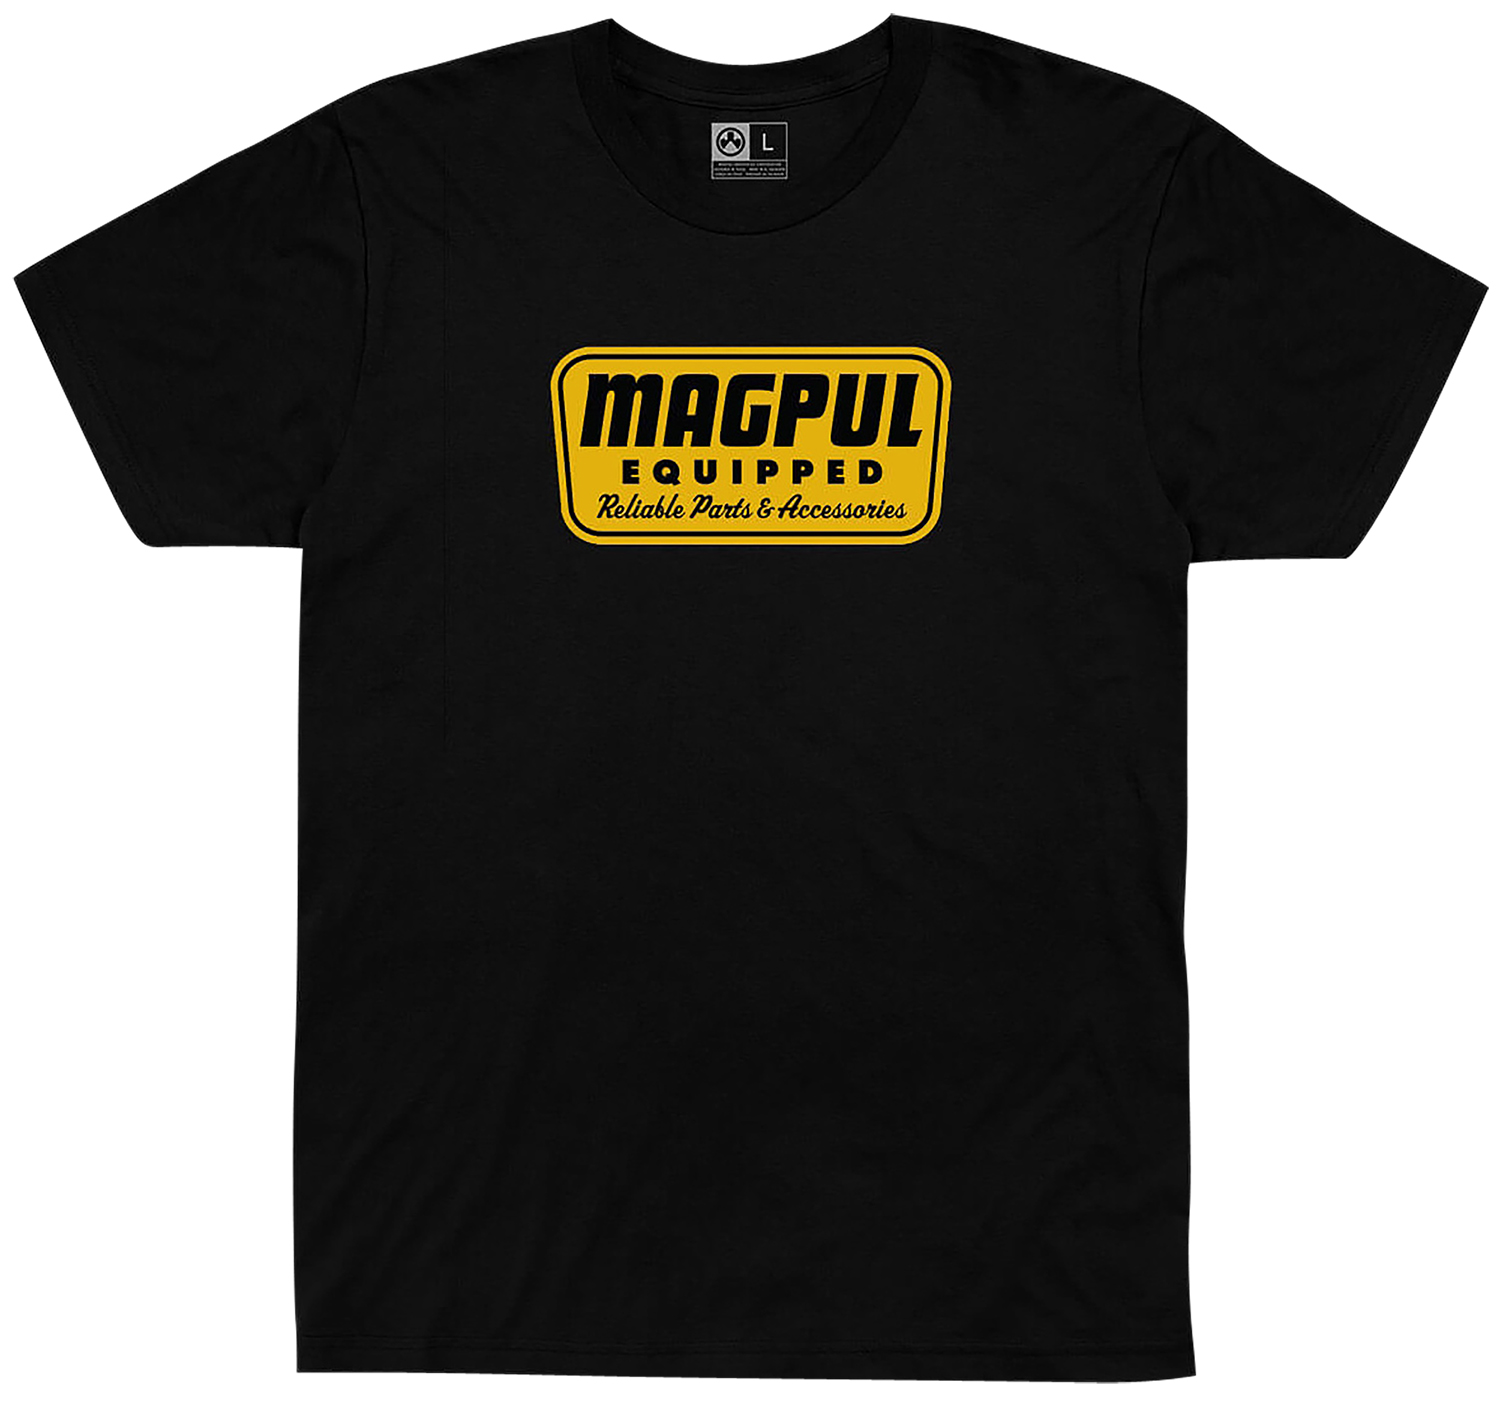 Magpul MAG1205-001-2X Equipped T-Shirt Black Short Sleeve 2XL